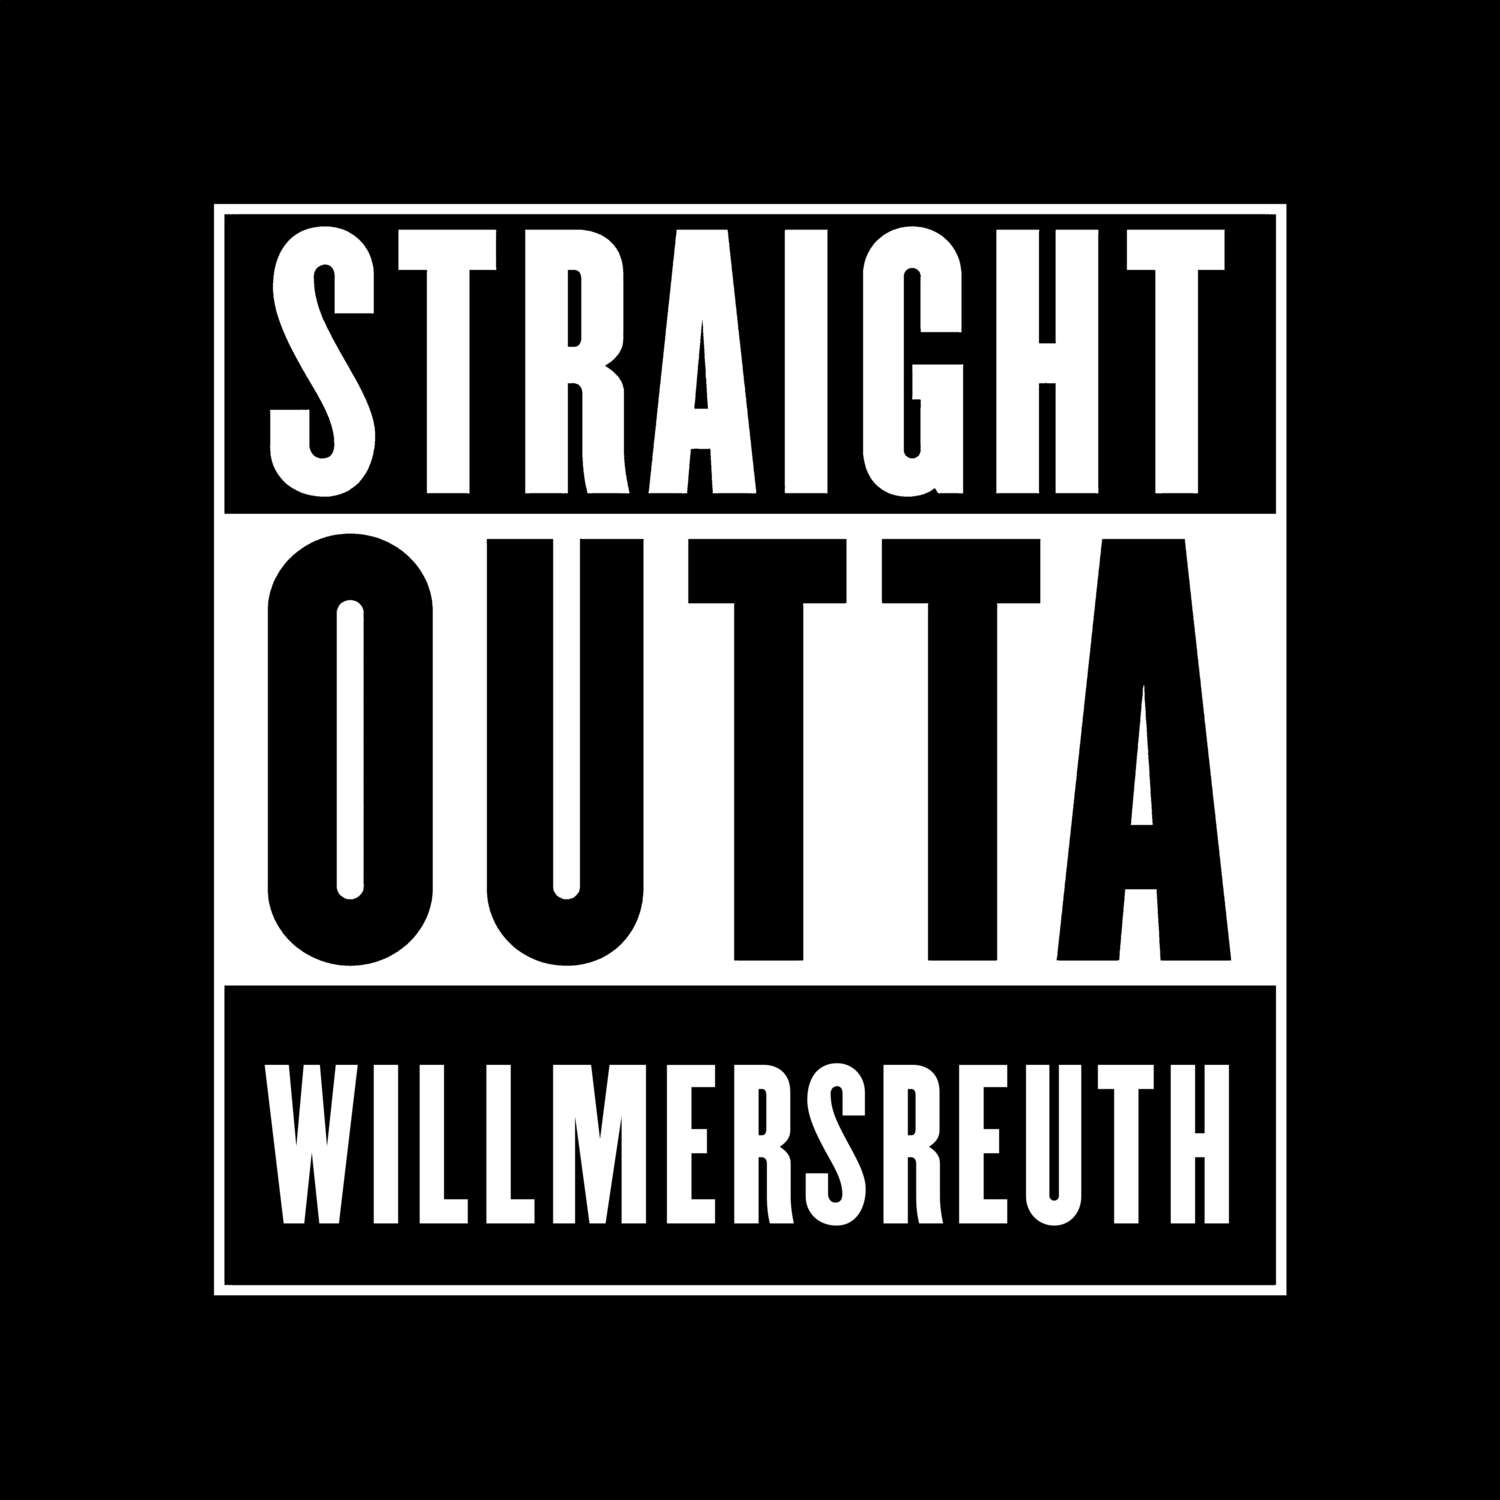 Willmersreuth T-Shirt »Straight Outta«